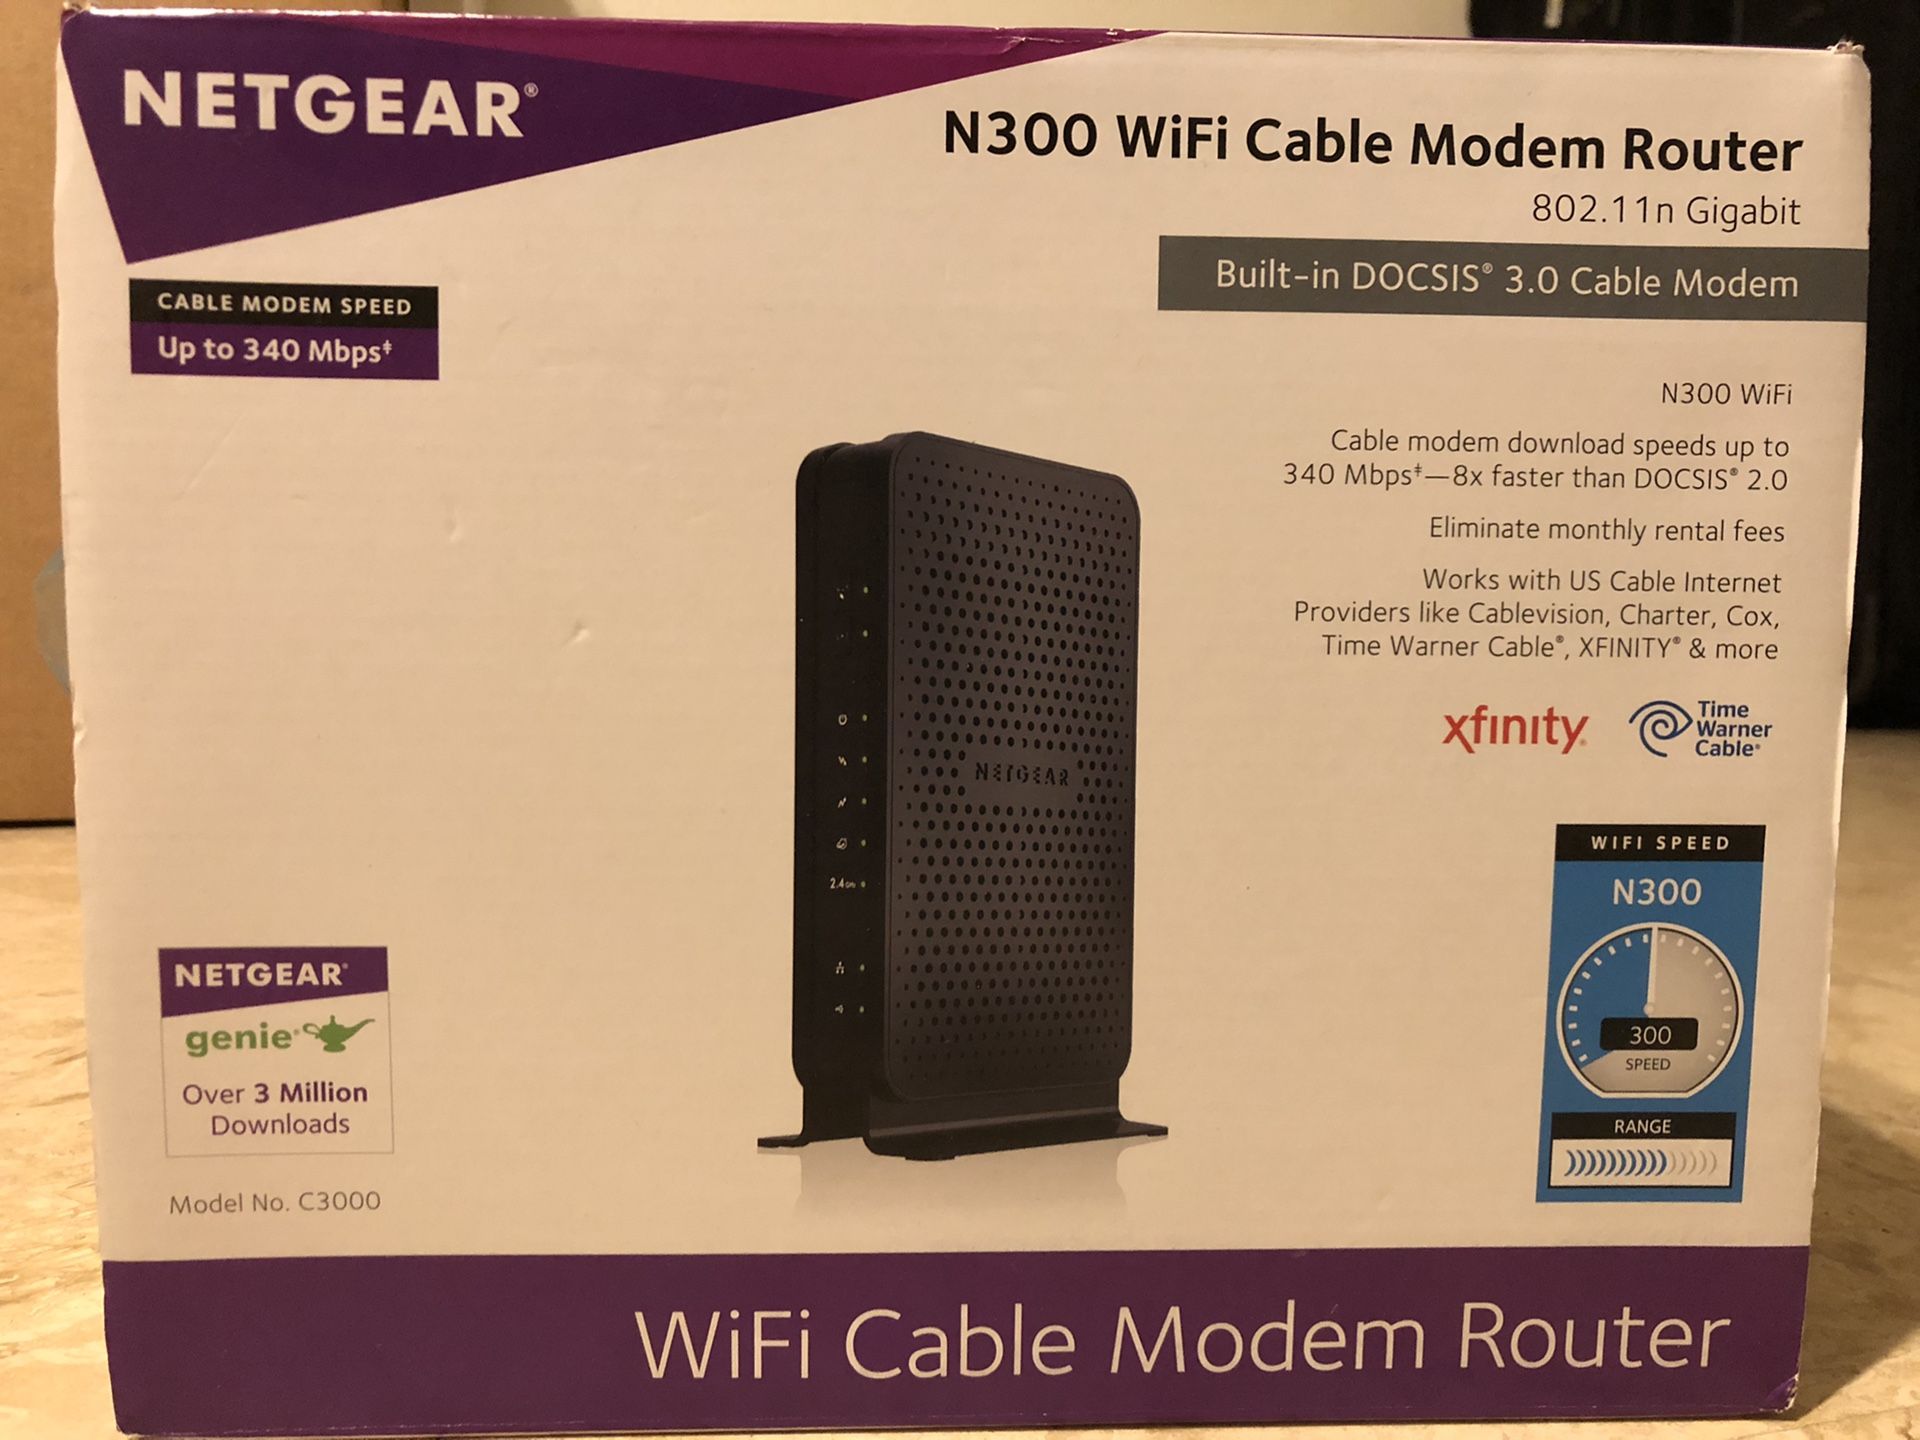 Netgear WiFi Cable Modem Router - N300